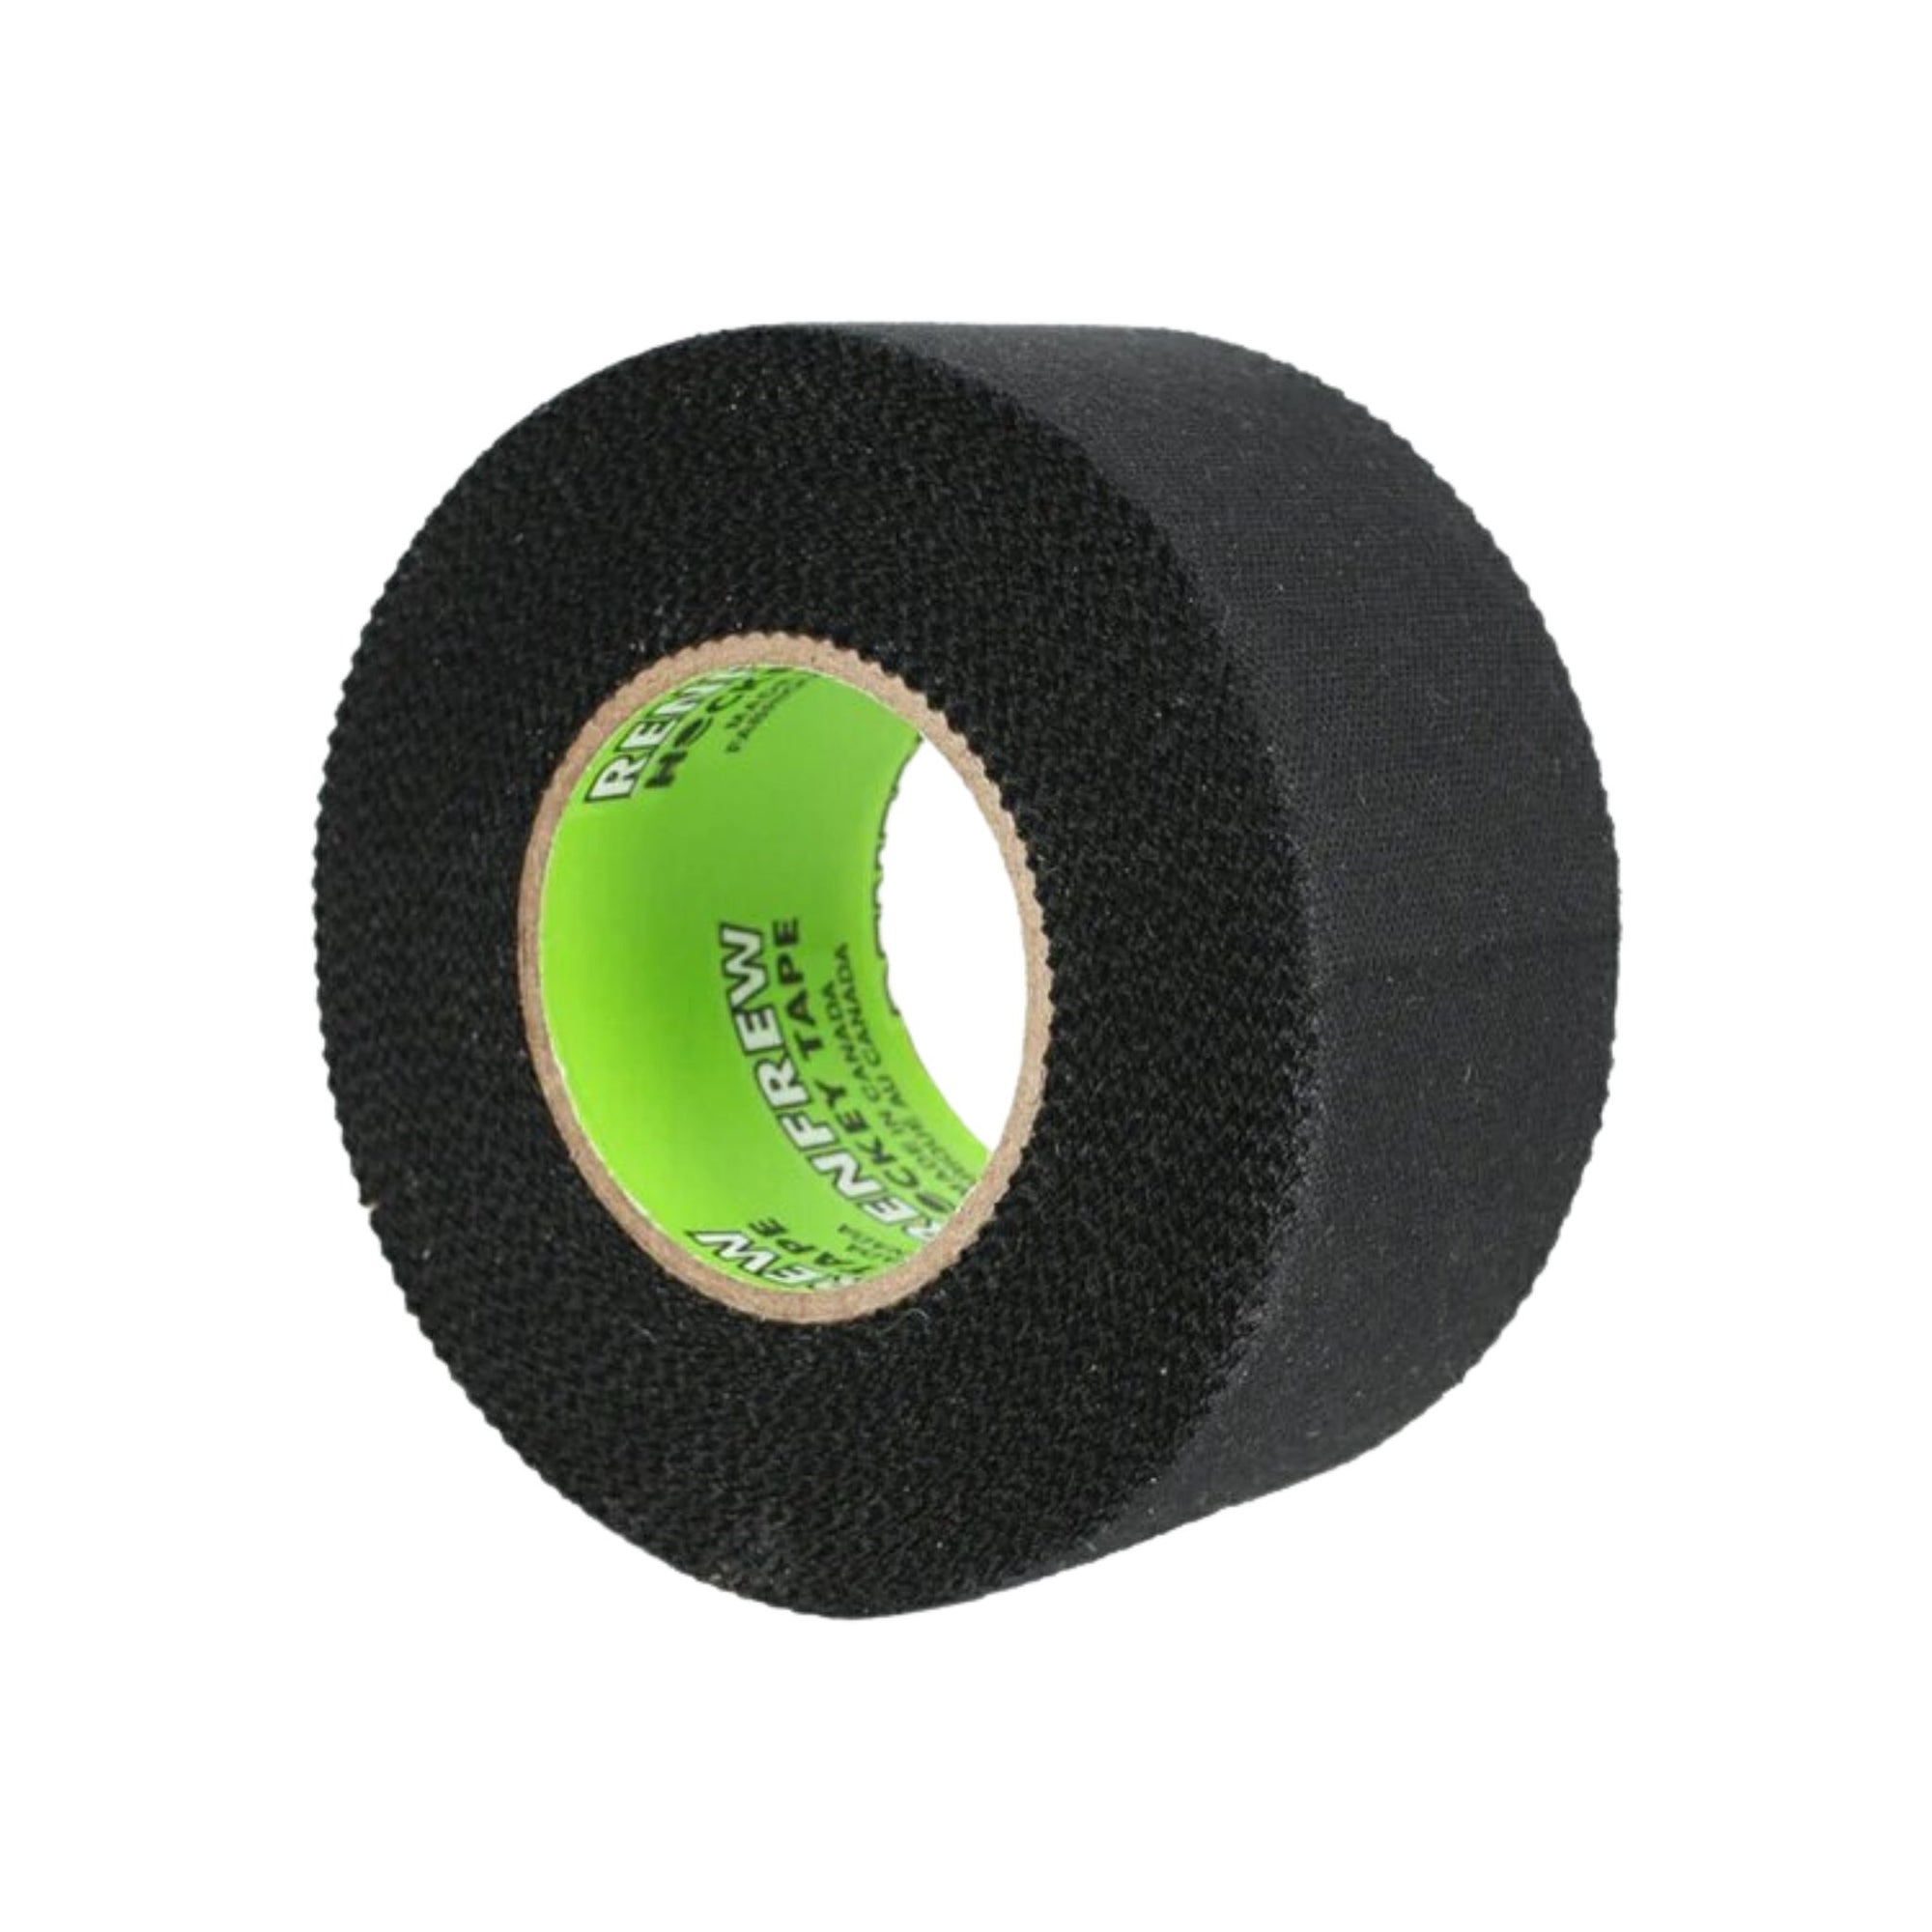 Skate Tape 36mm Wide x 25M Long - Renfrew Pro -Roller Skates Parts and Accessories | JT Skate